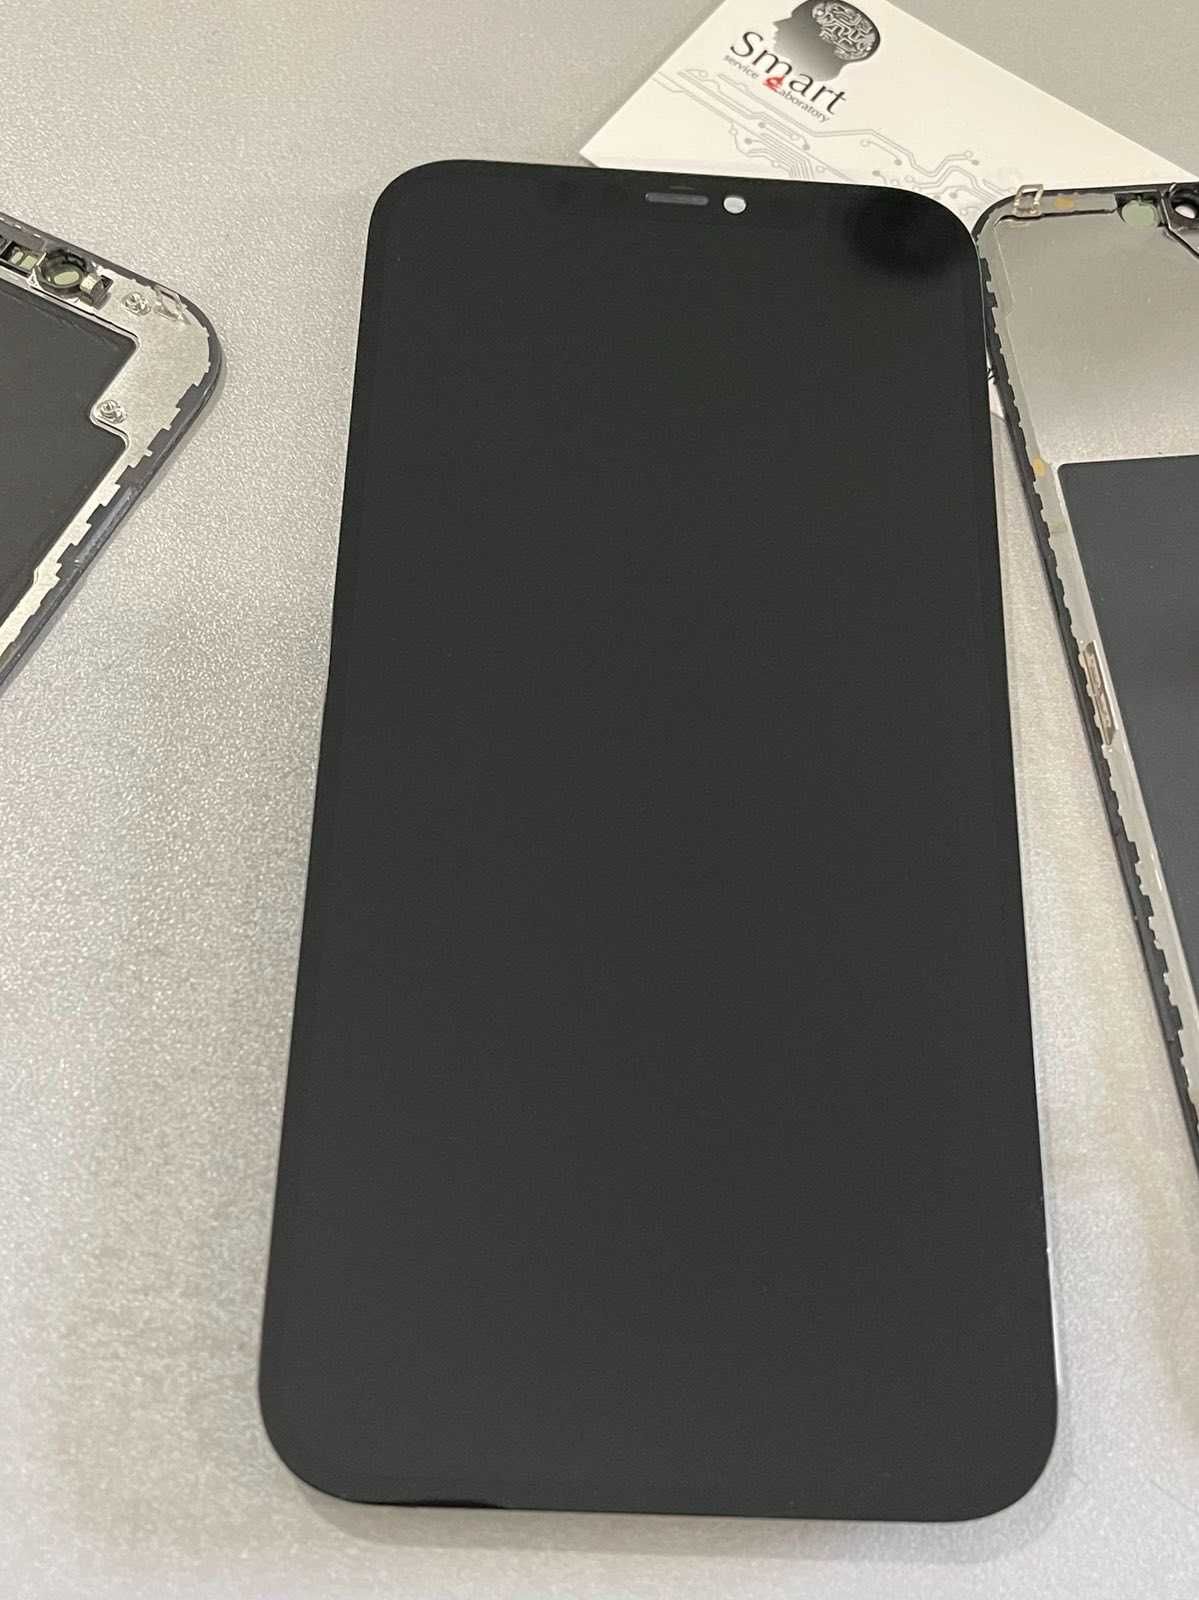 ОРИГІНАЛ! Дисплей модуль екран экран Айфон iPhone 12 Pro Max ремонт